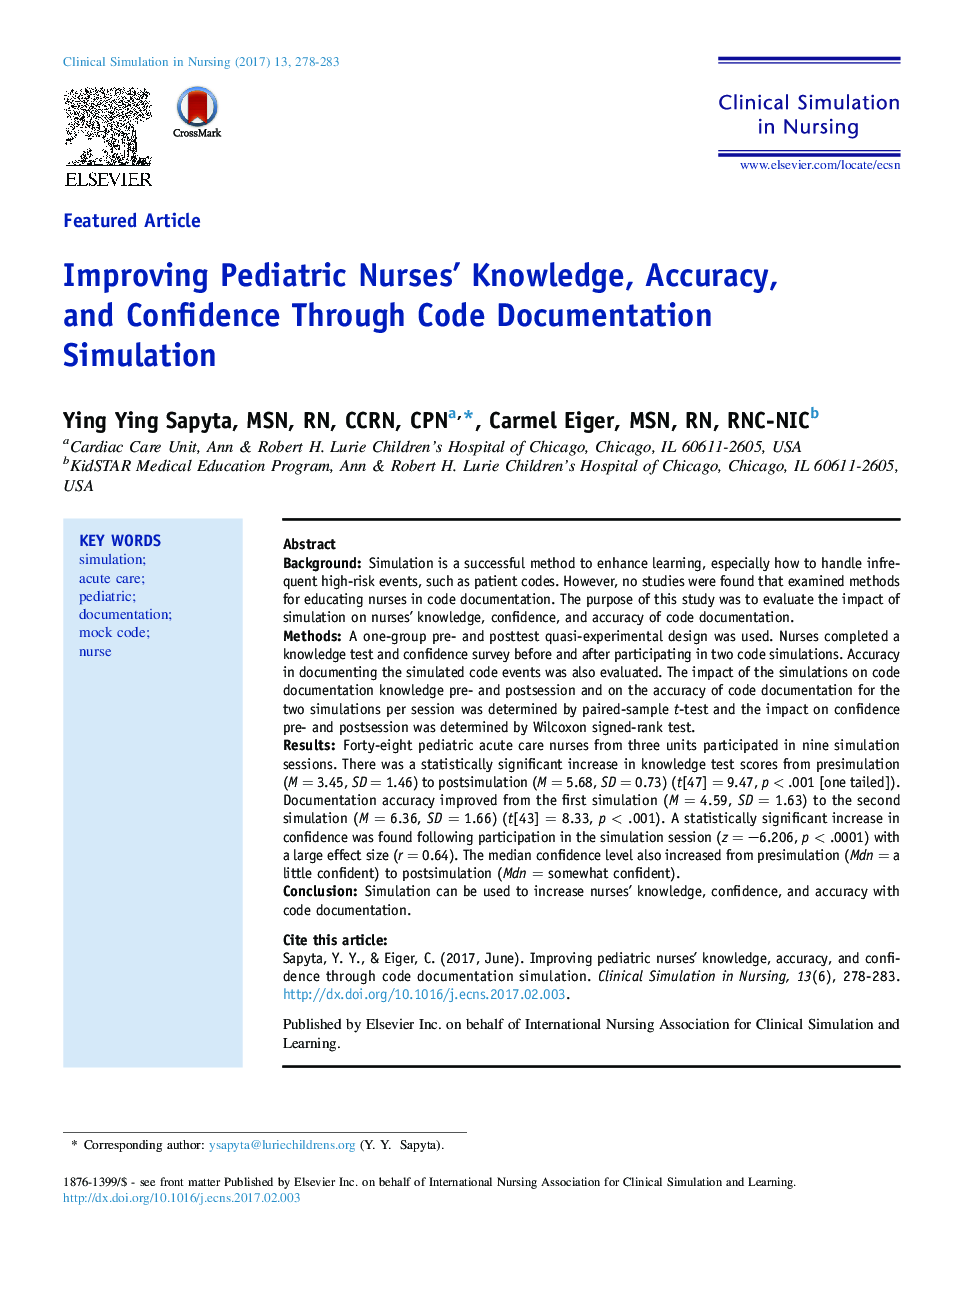 Improving Pediatric Nurses' Knowledge, Accuracy, and Confidence Through Code Documentation Simulation